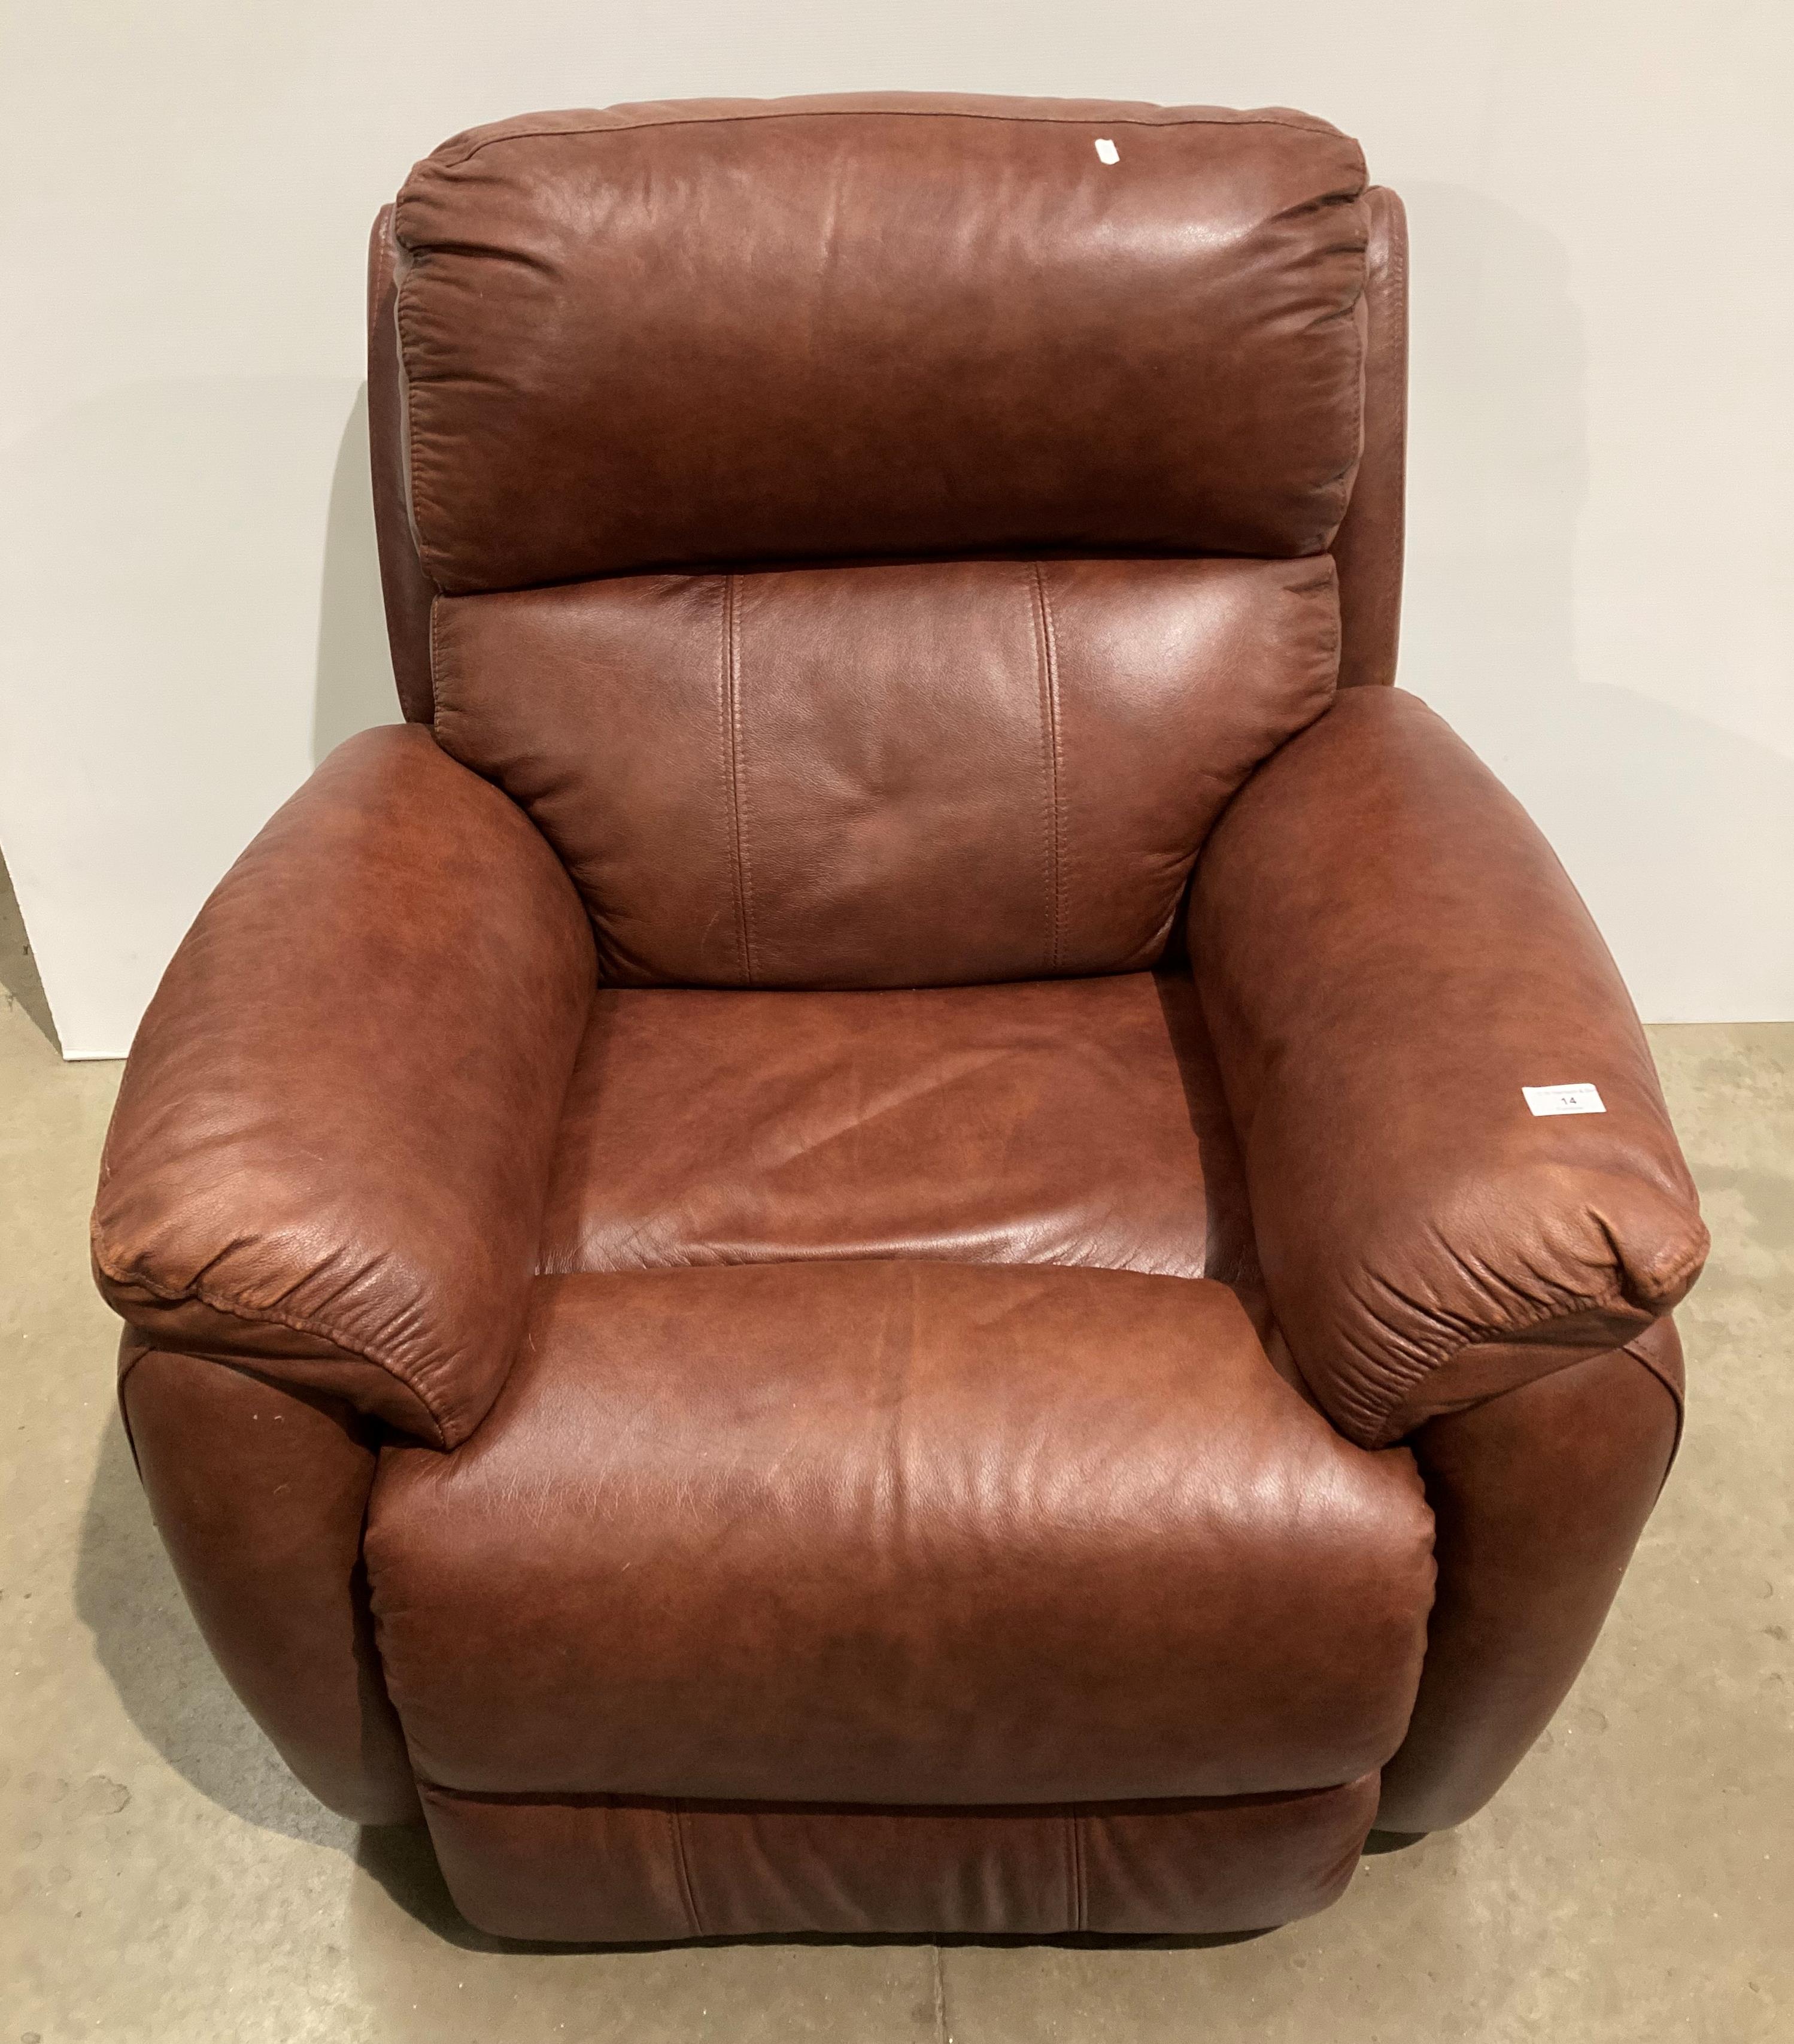 Brown leather manual reclining armchair (Saleroom location: Kit)